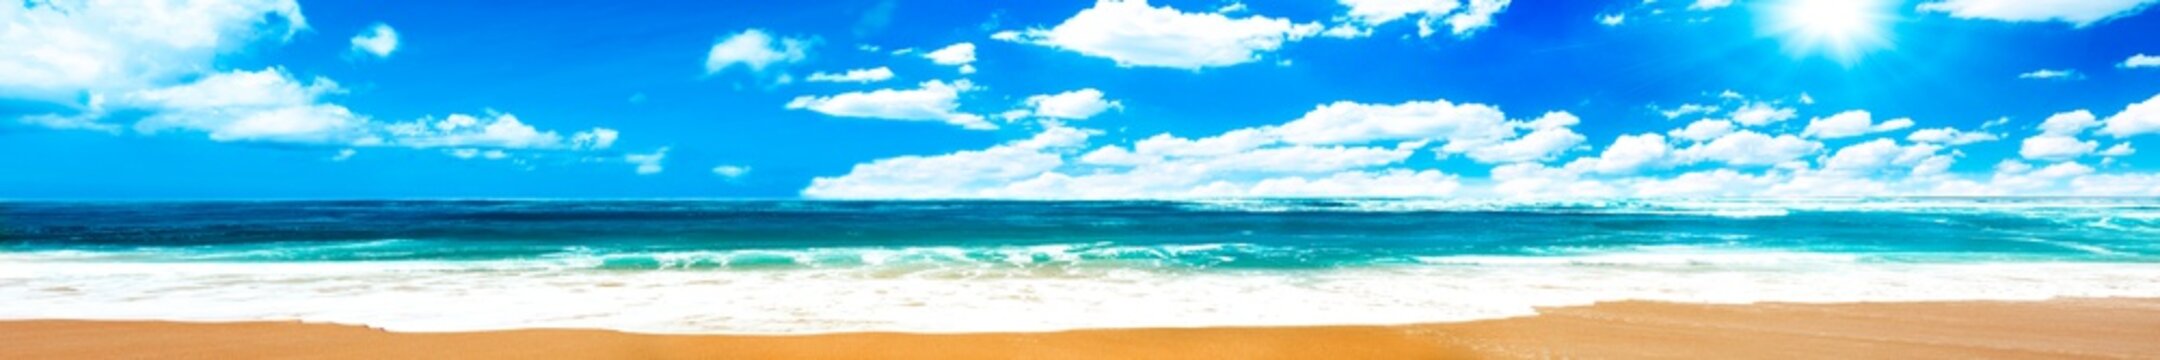 Fototapeta Ocean and blue sky